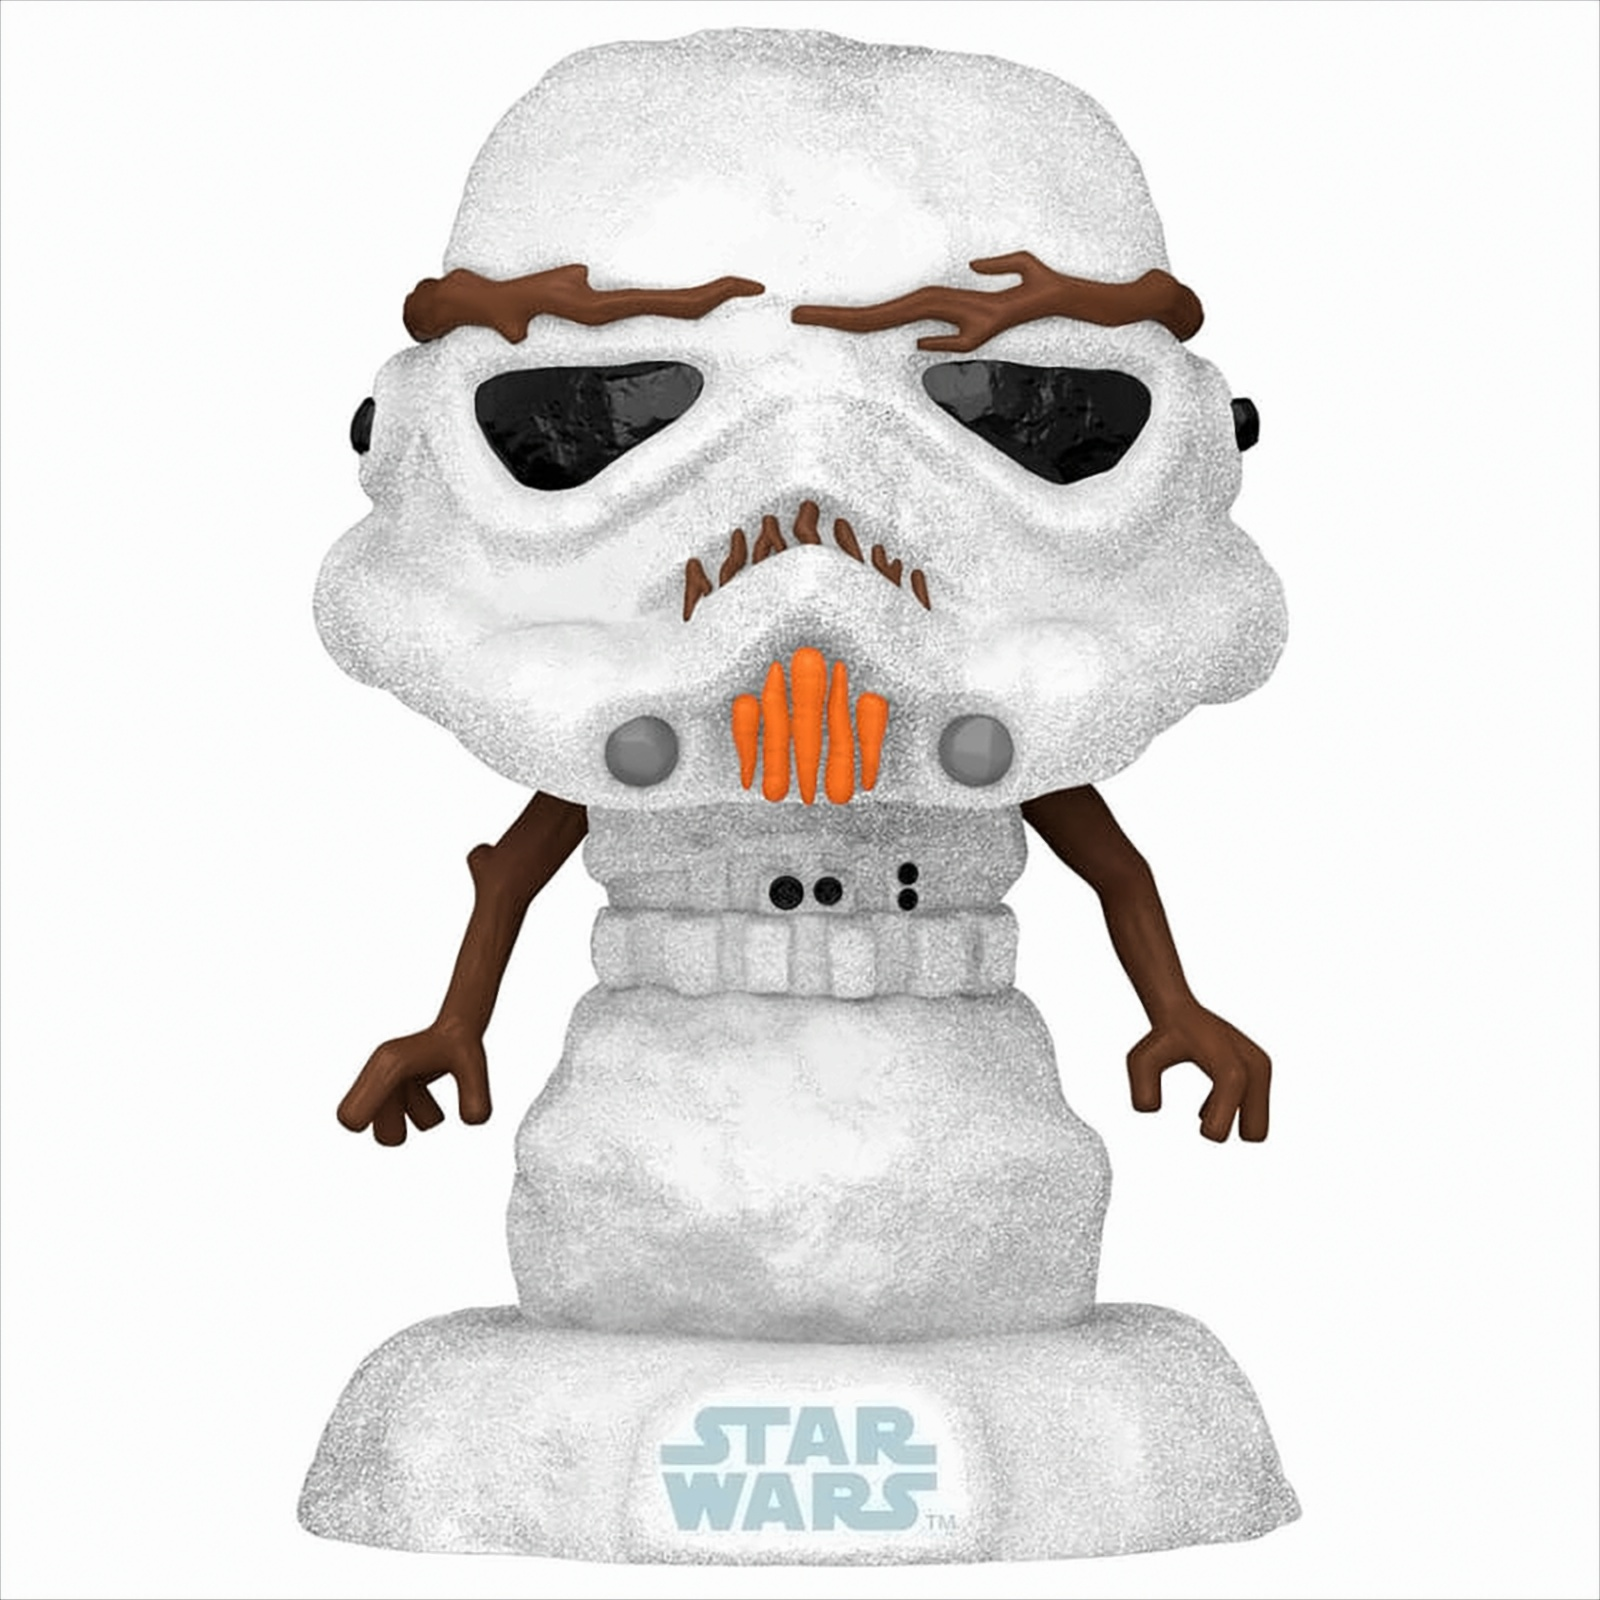 - - Stormtrooper Holiday 2022 Wars Star POP